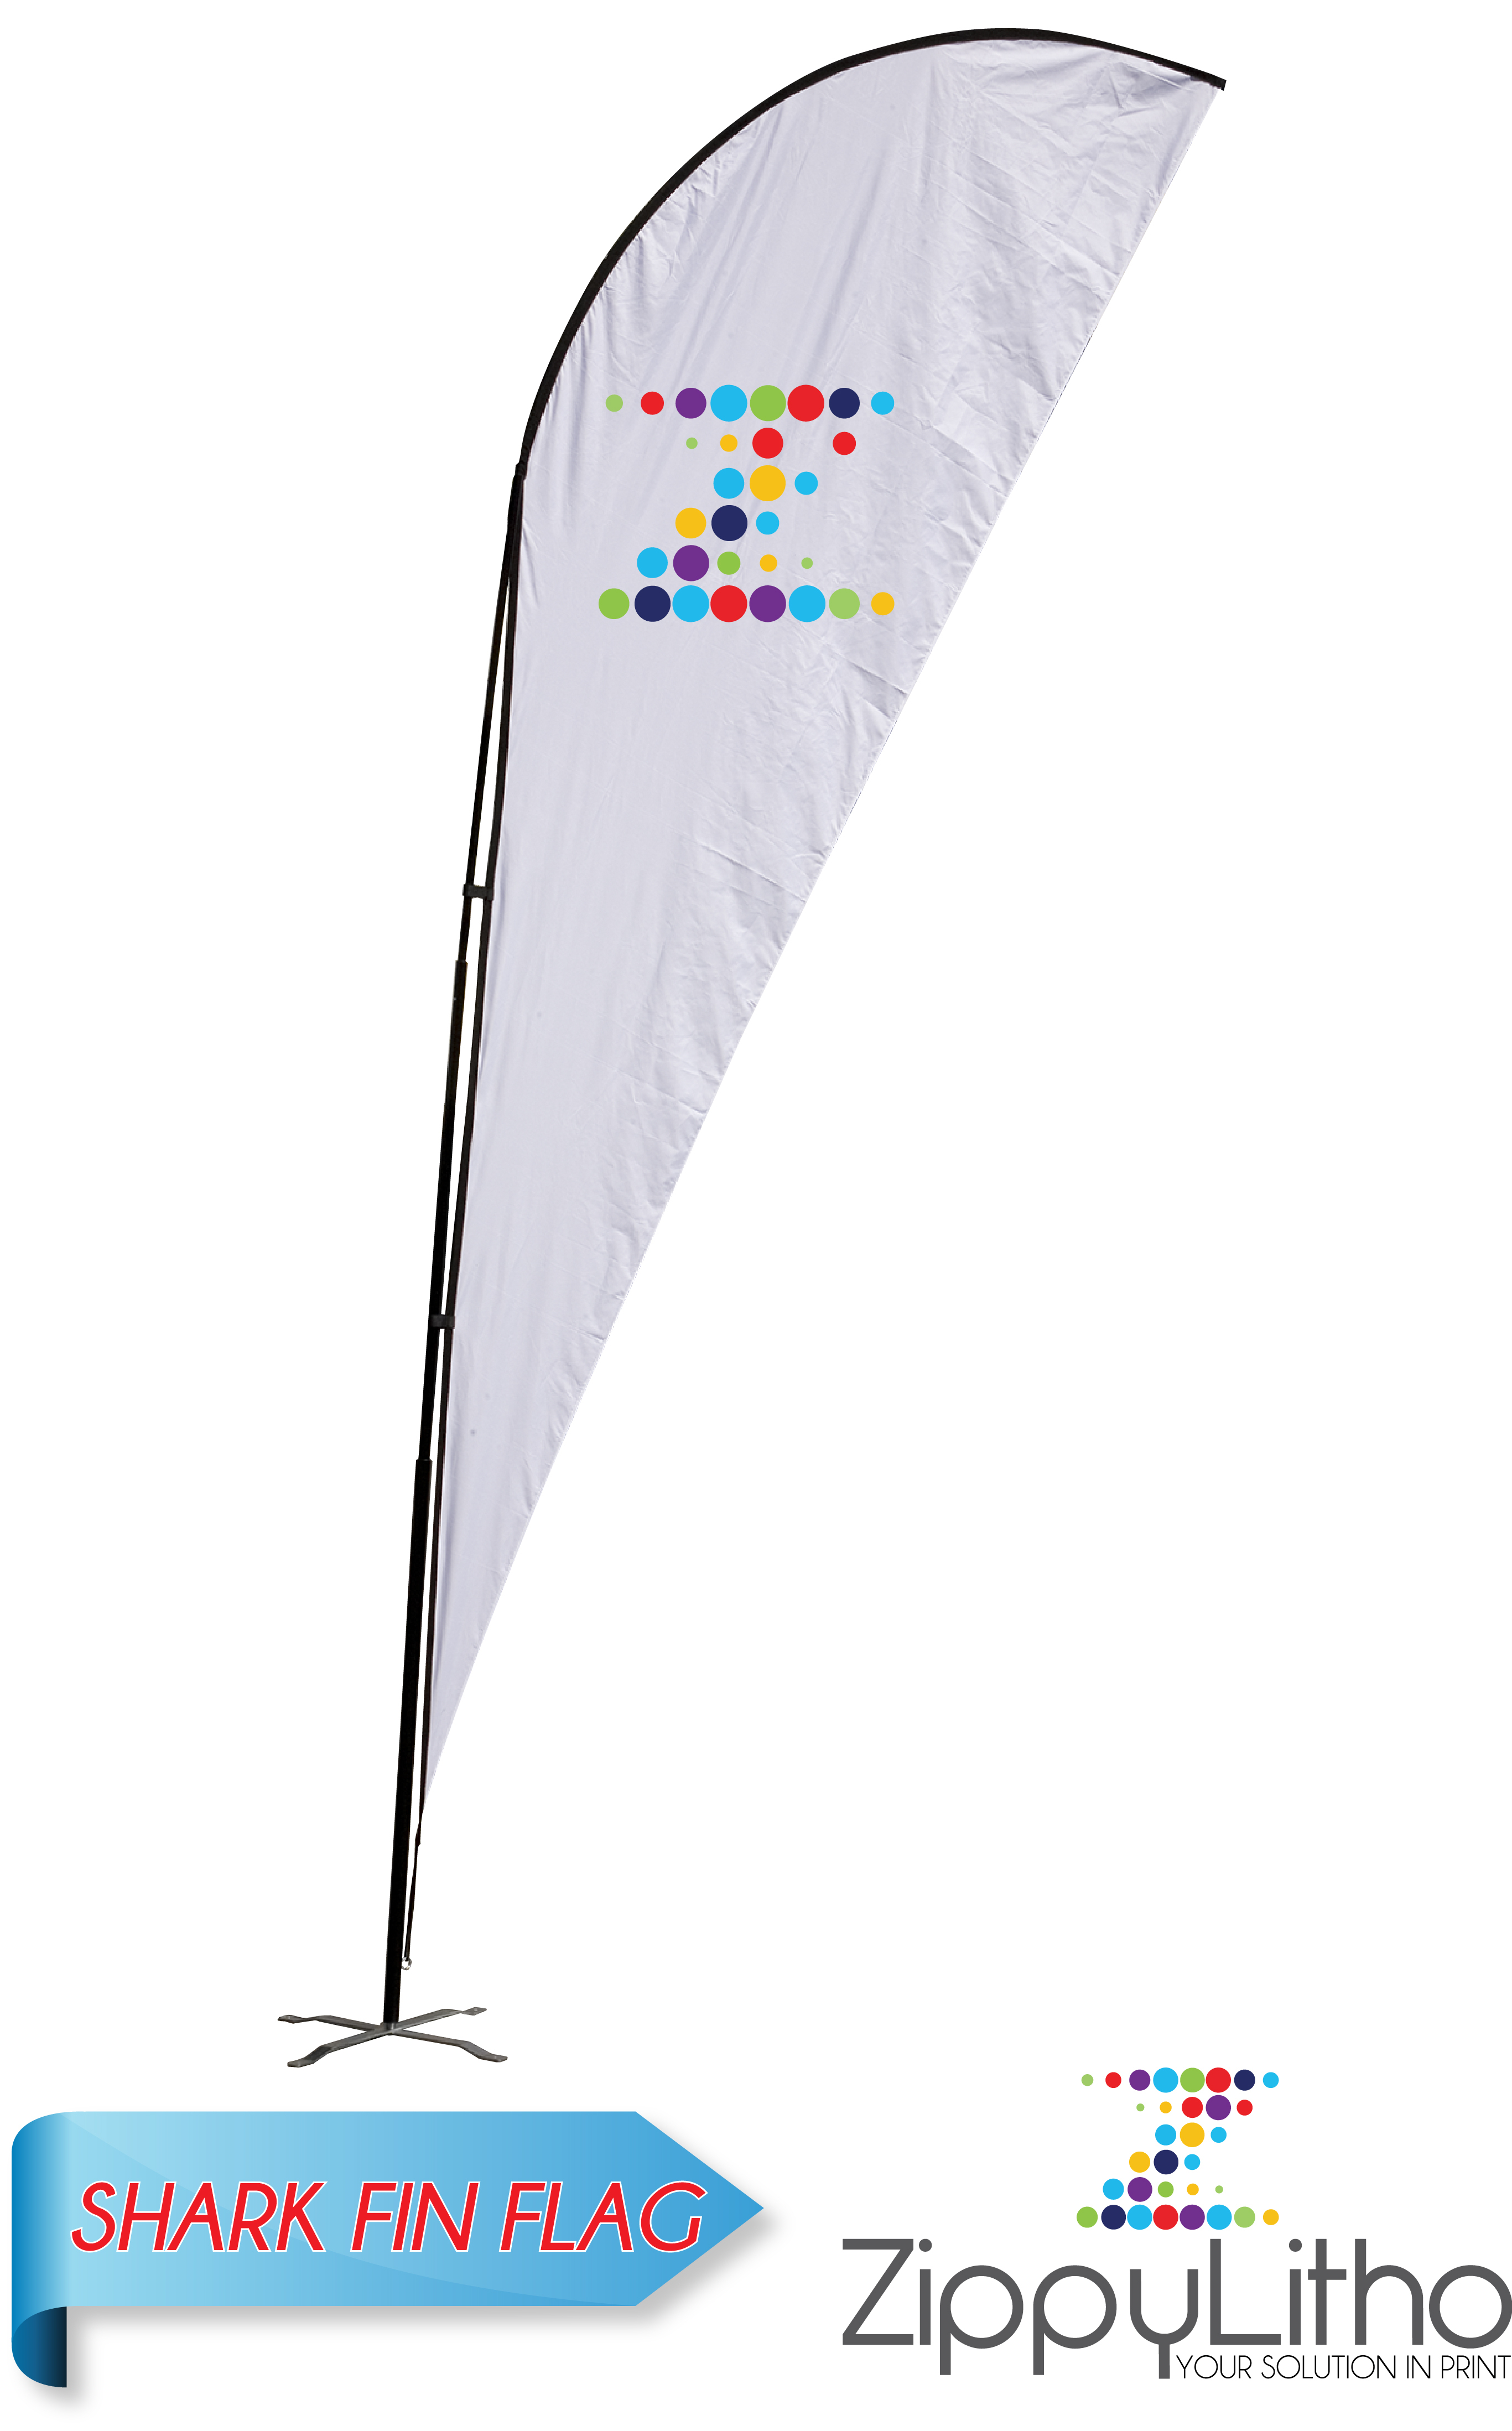 Shark Fin Flag | Zippy Litho With Sharkfin Banner Template